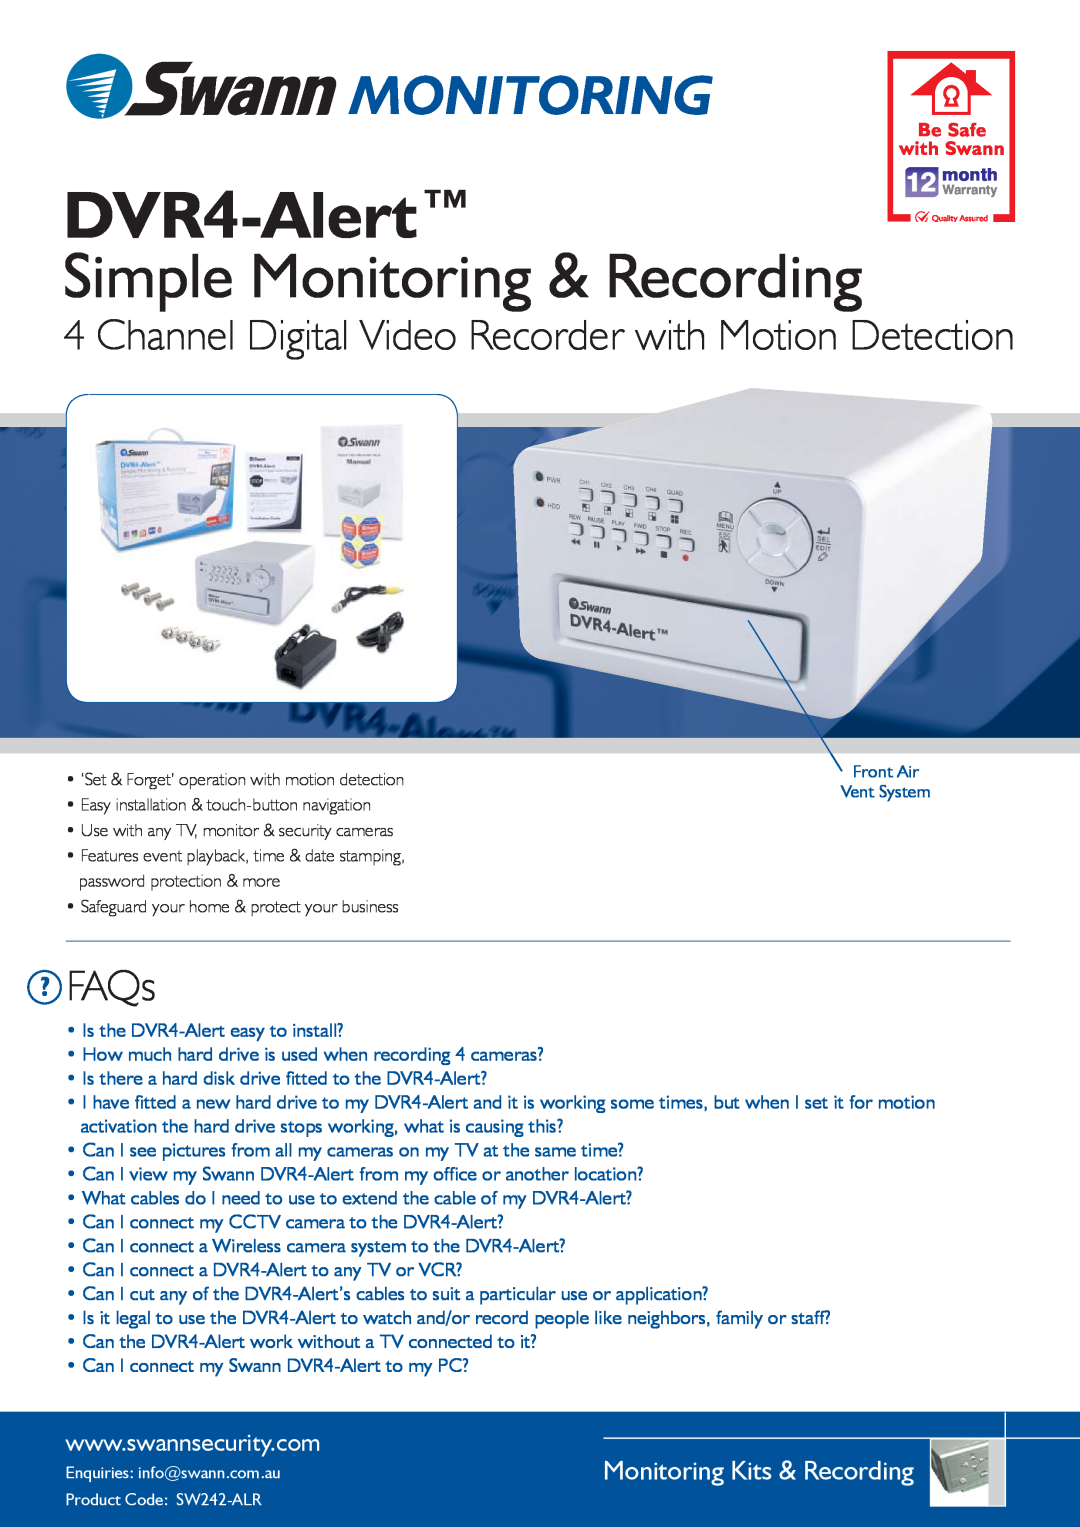 Swann SW242-ALR warranty Monitoring Kits & Recording, DVR4-AlertWarranty, Simple Monitoring & Recording, ? FAQs 